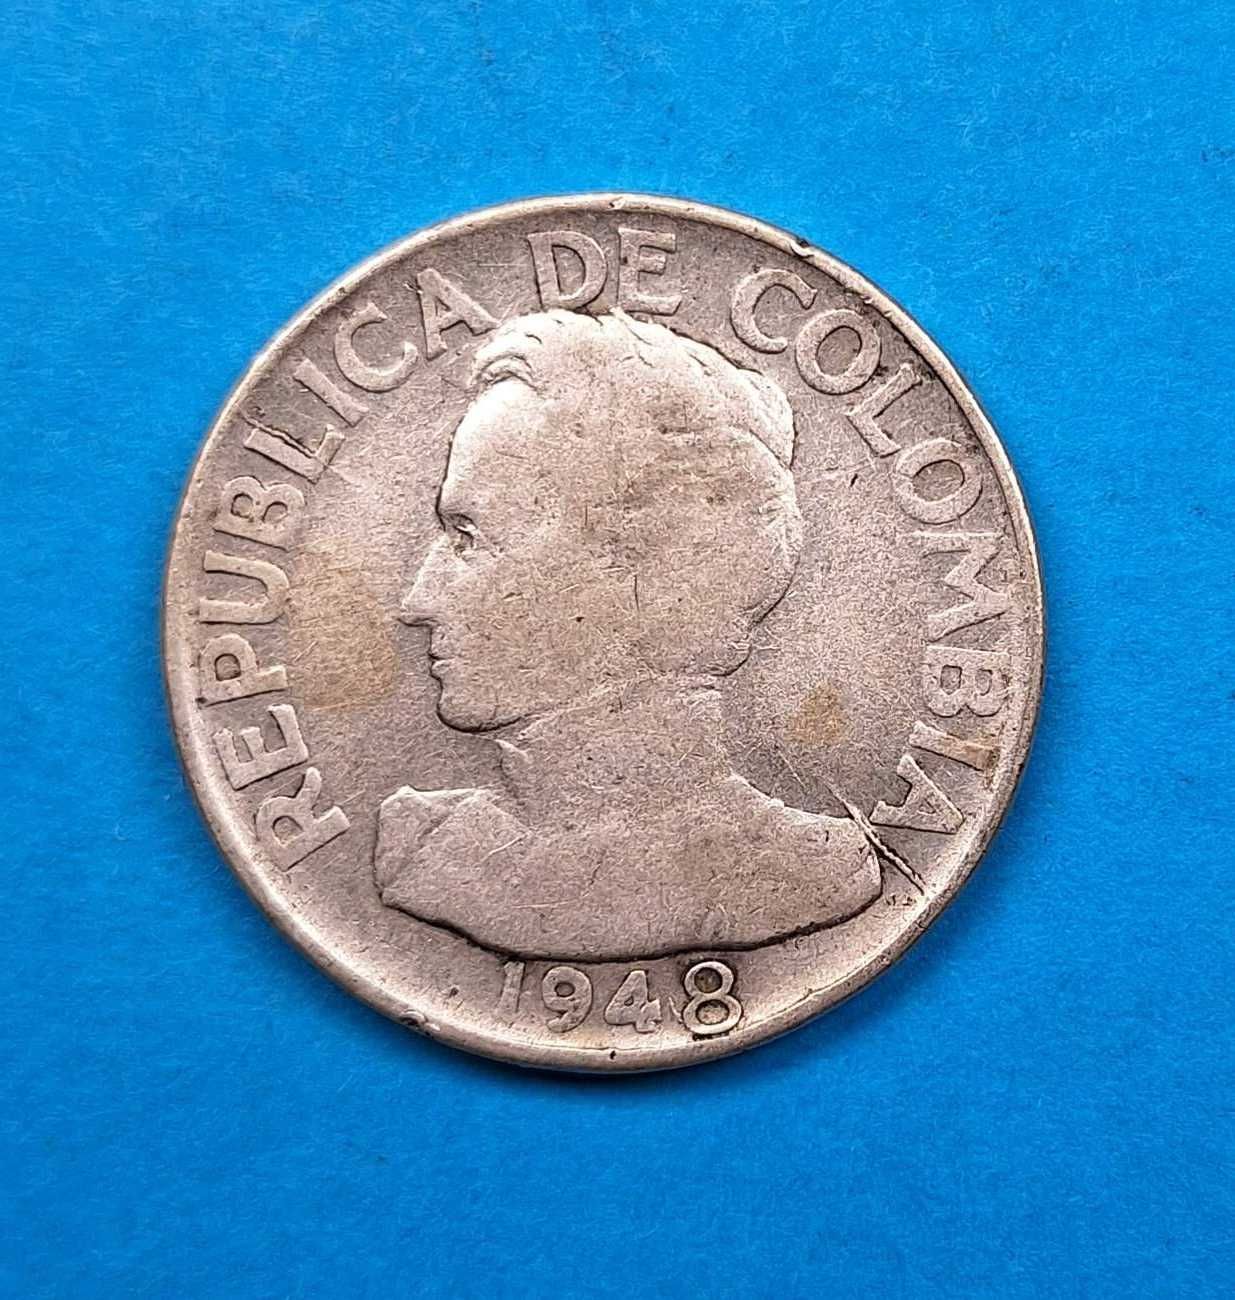 Kolumbia 50 centavos rok 1948, dobry stan, srebro 0,500